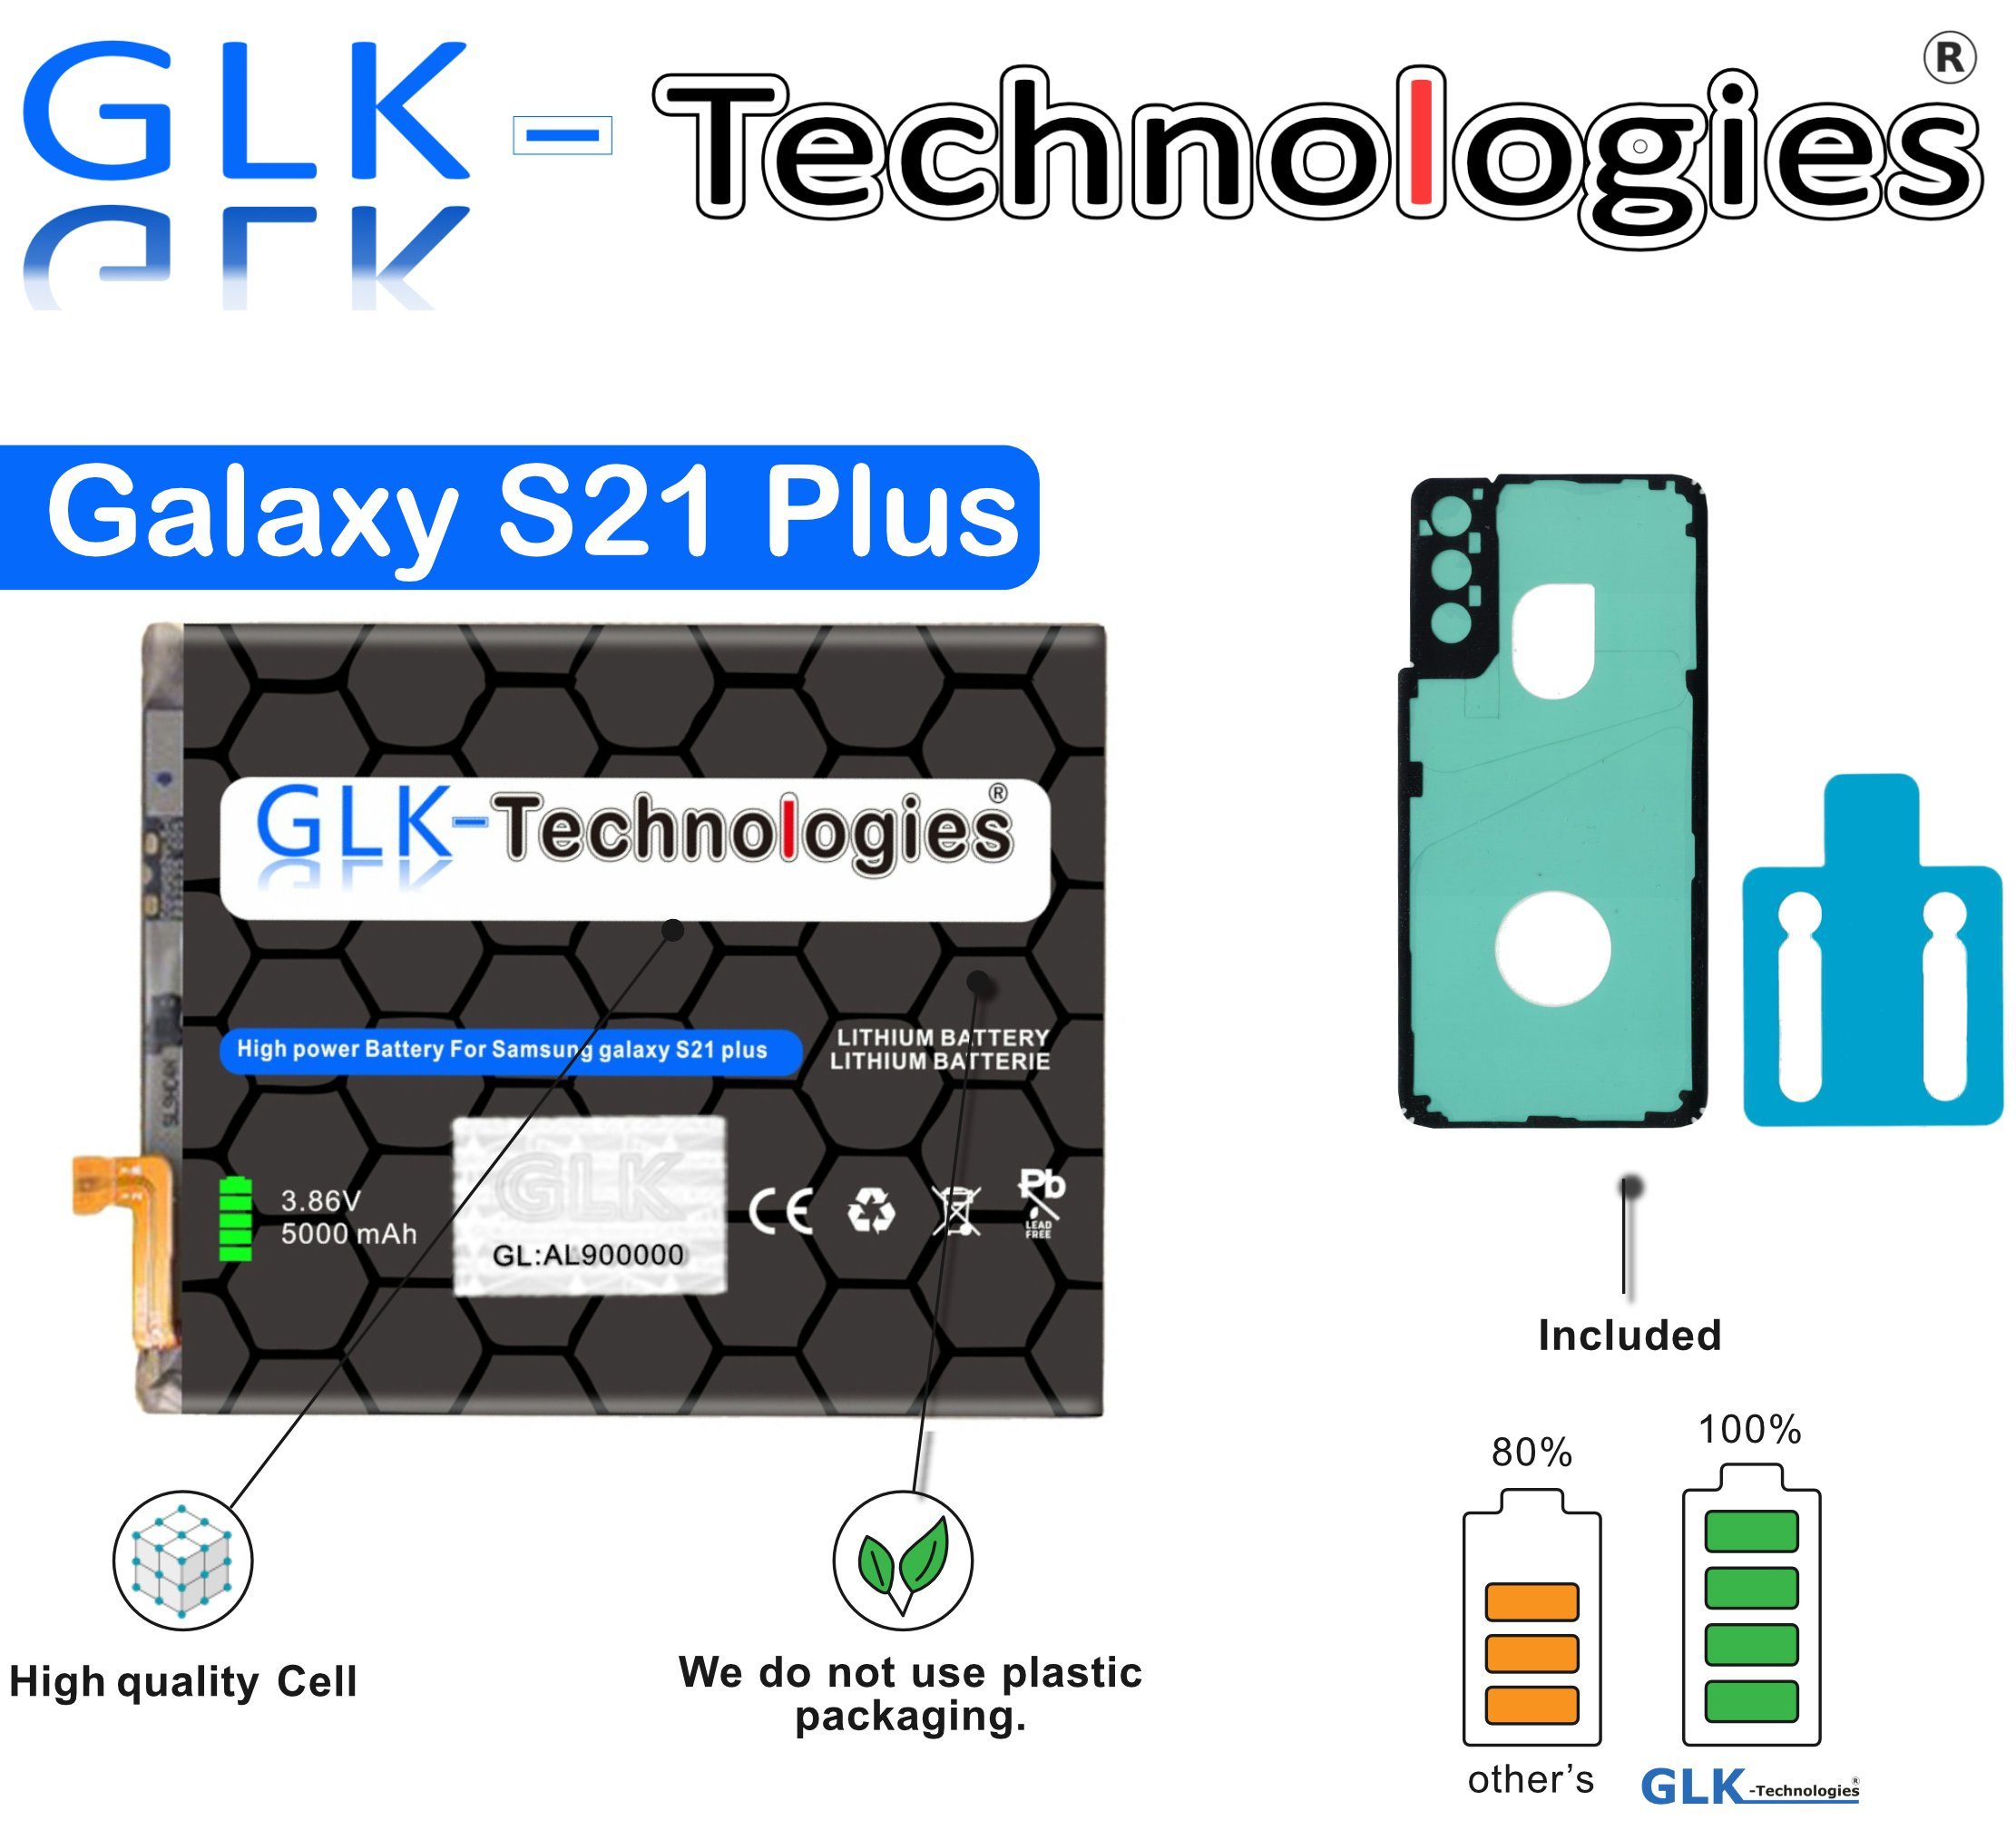 GLK-Technologies Klebebandsätze Plus 4200 G996B Galaxy S21 Handy-Akku EB-BG996ABY inkl. 2X Samsung mAh